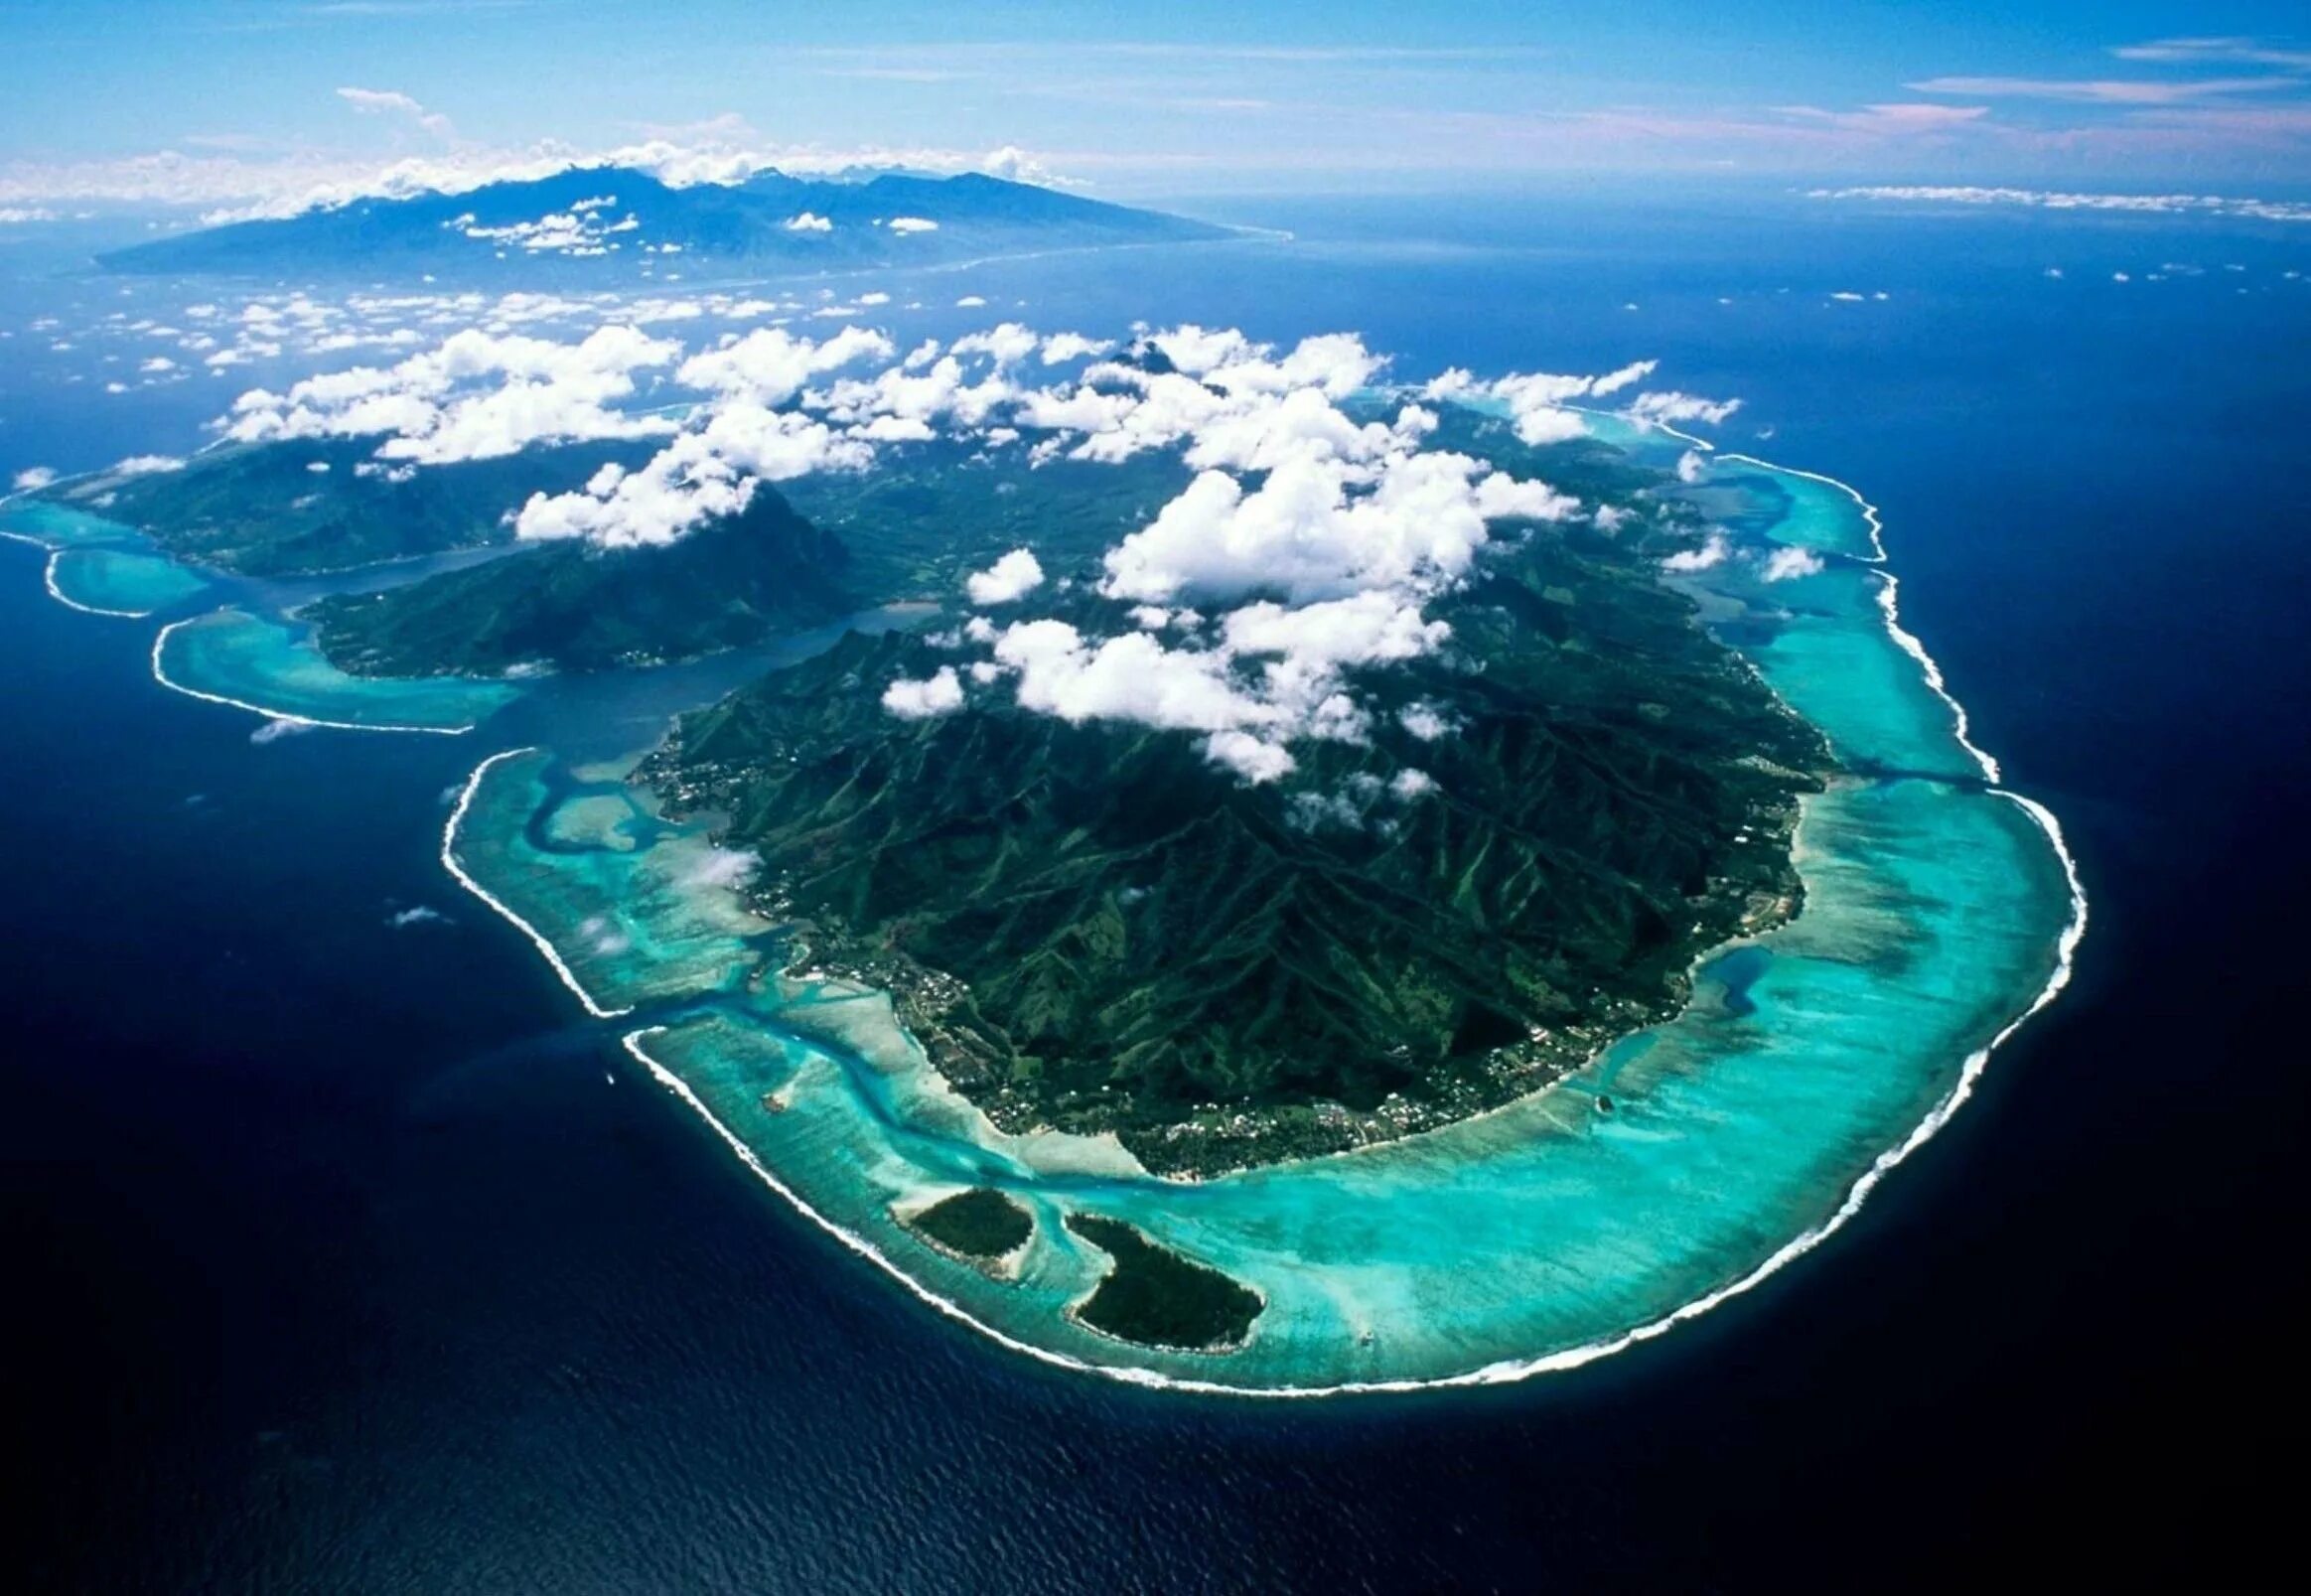 Tahiti французская Полинезия. Муреа Таити. Таити остров архипелаг. Остров Марито французская Полинезия. Время в атлантическом океане